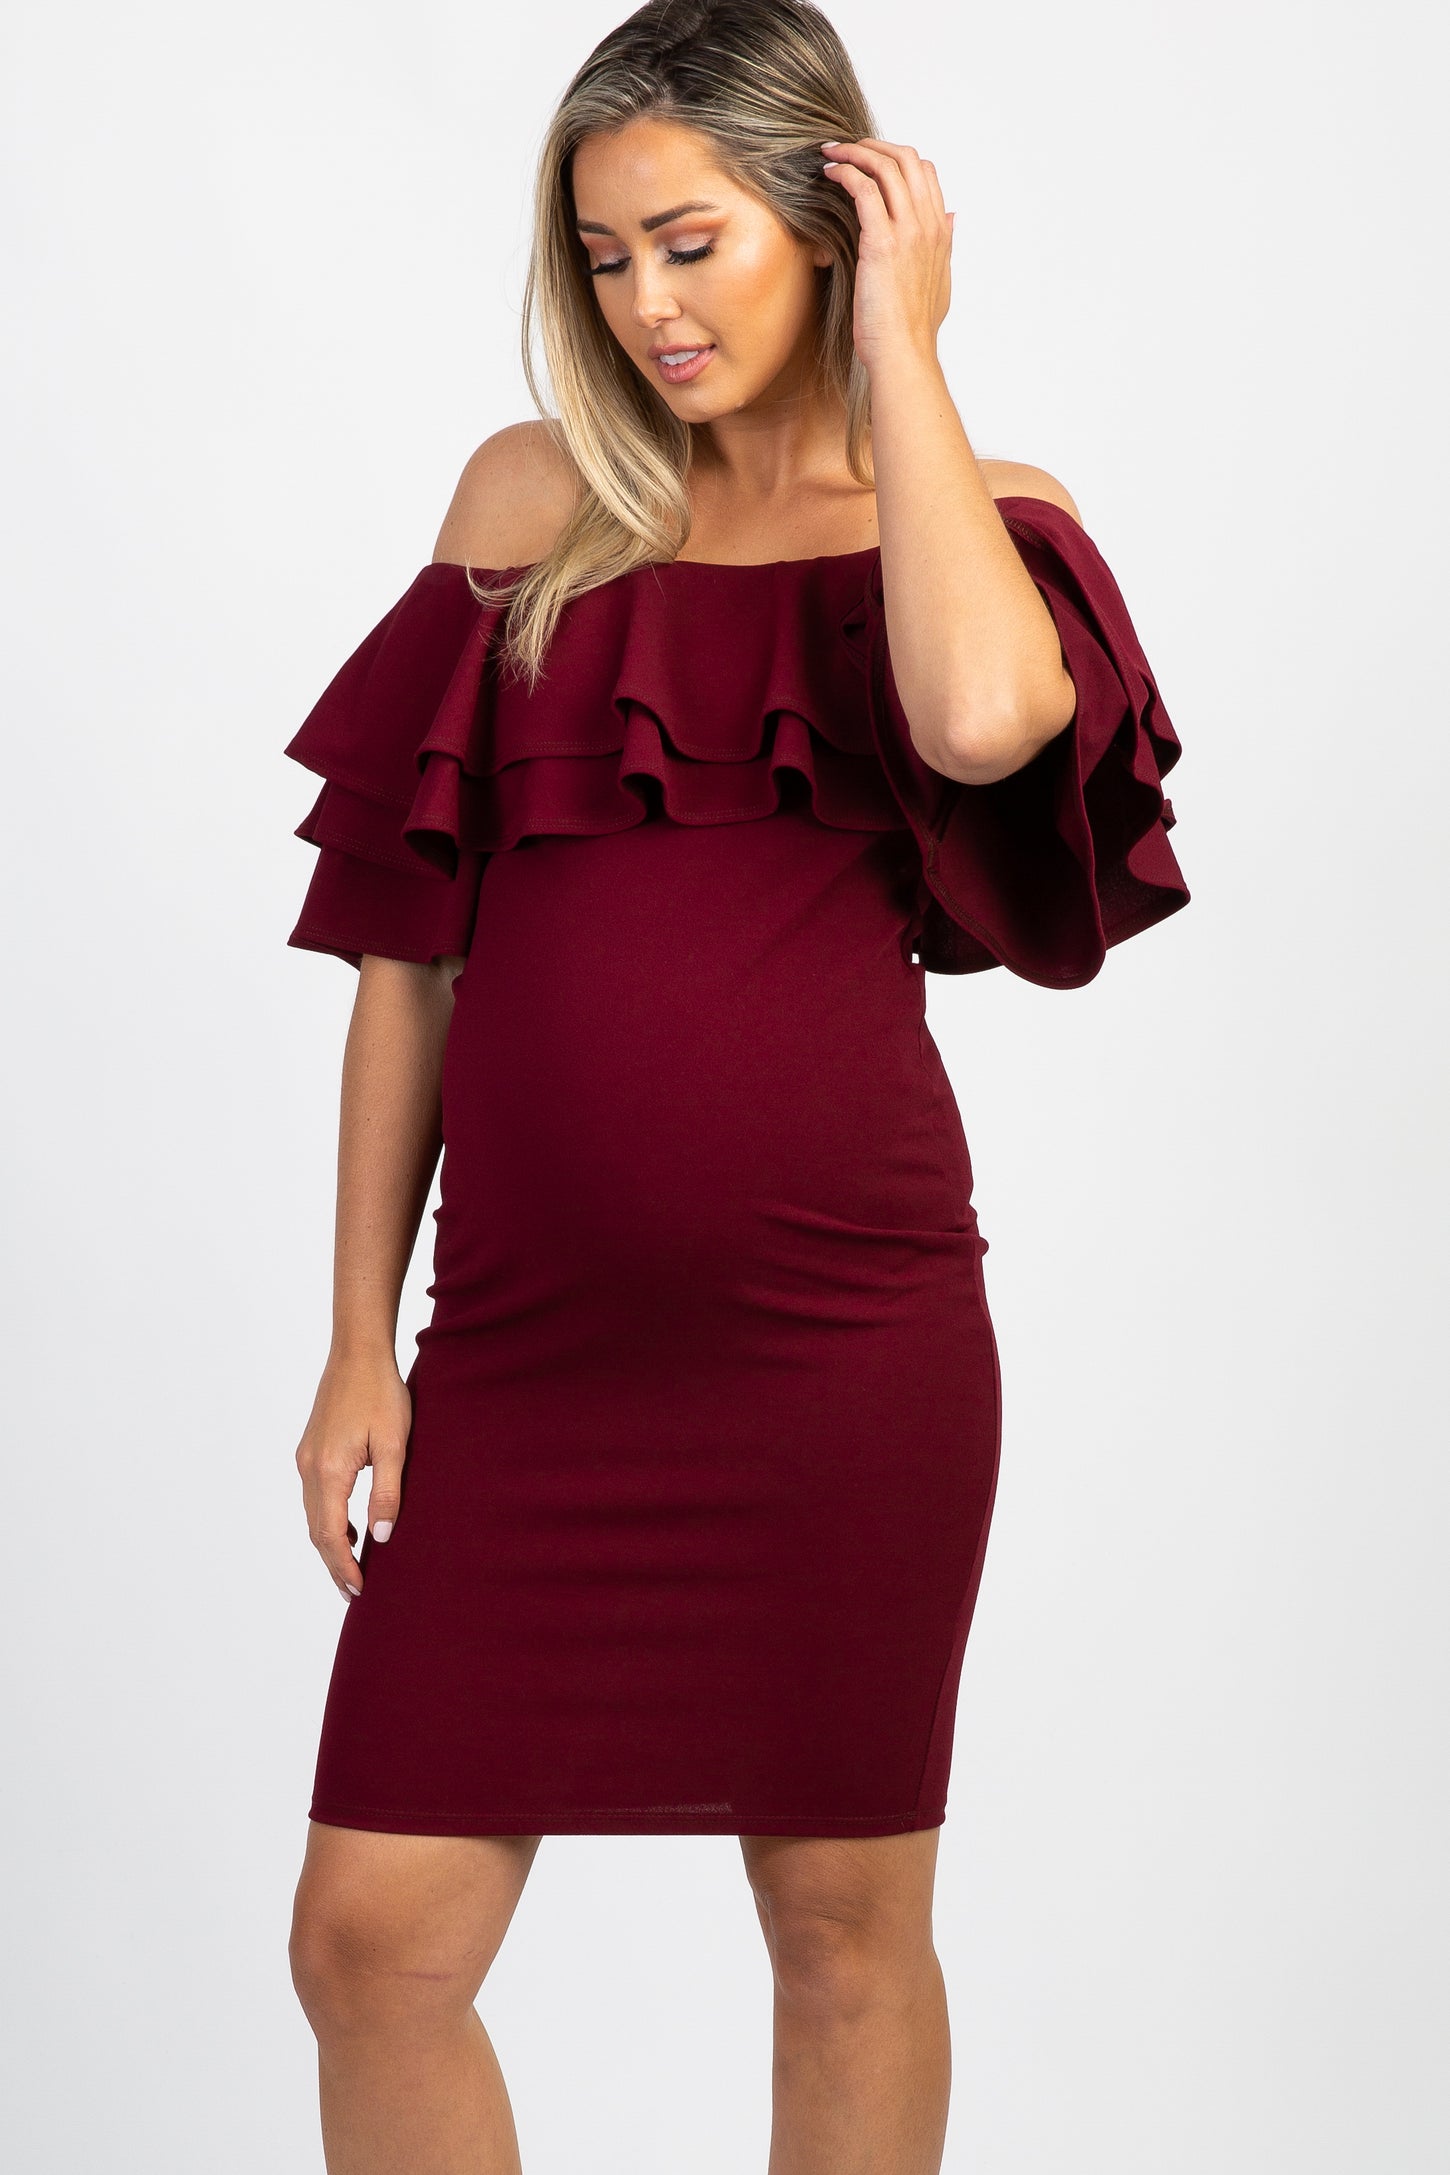 PinkBlush Burgundy Layered Ruffle Off Shoulder Fitted Maternity Dress